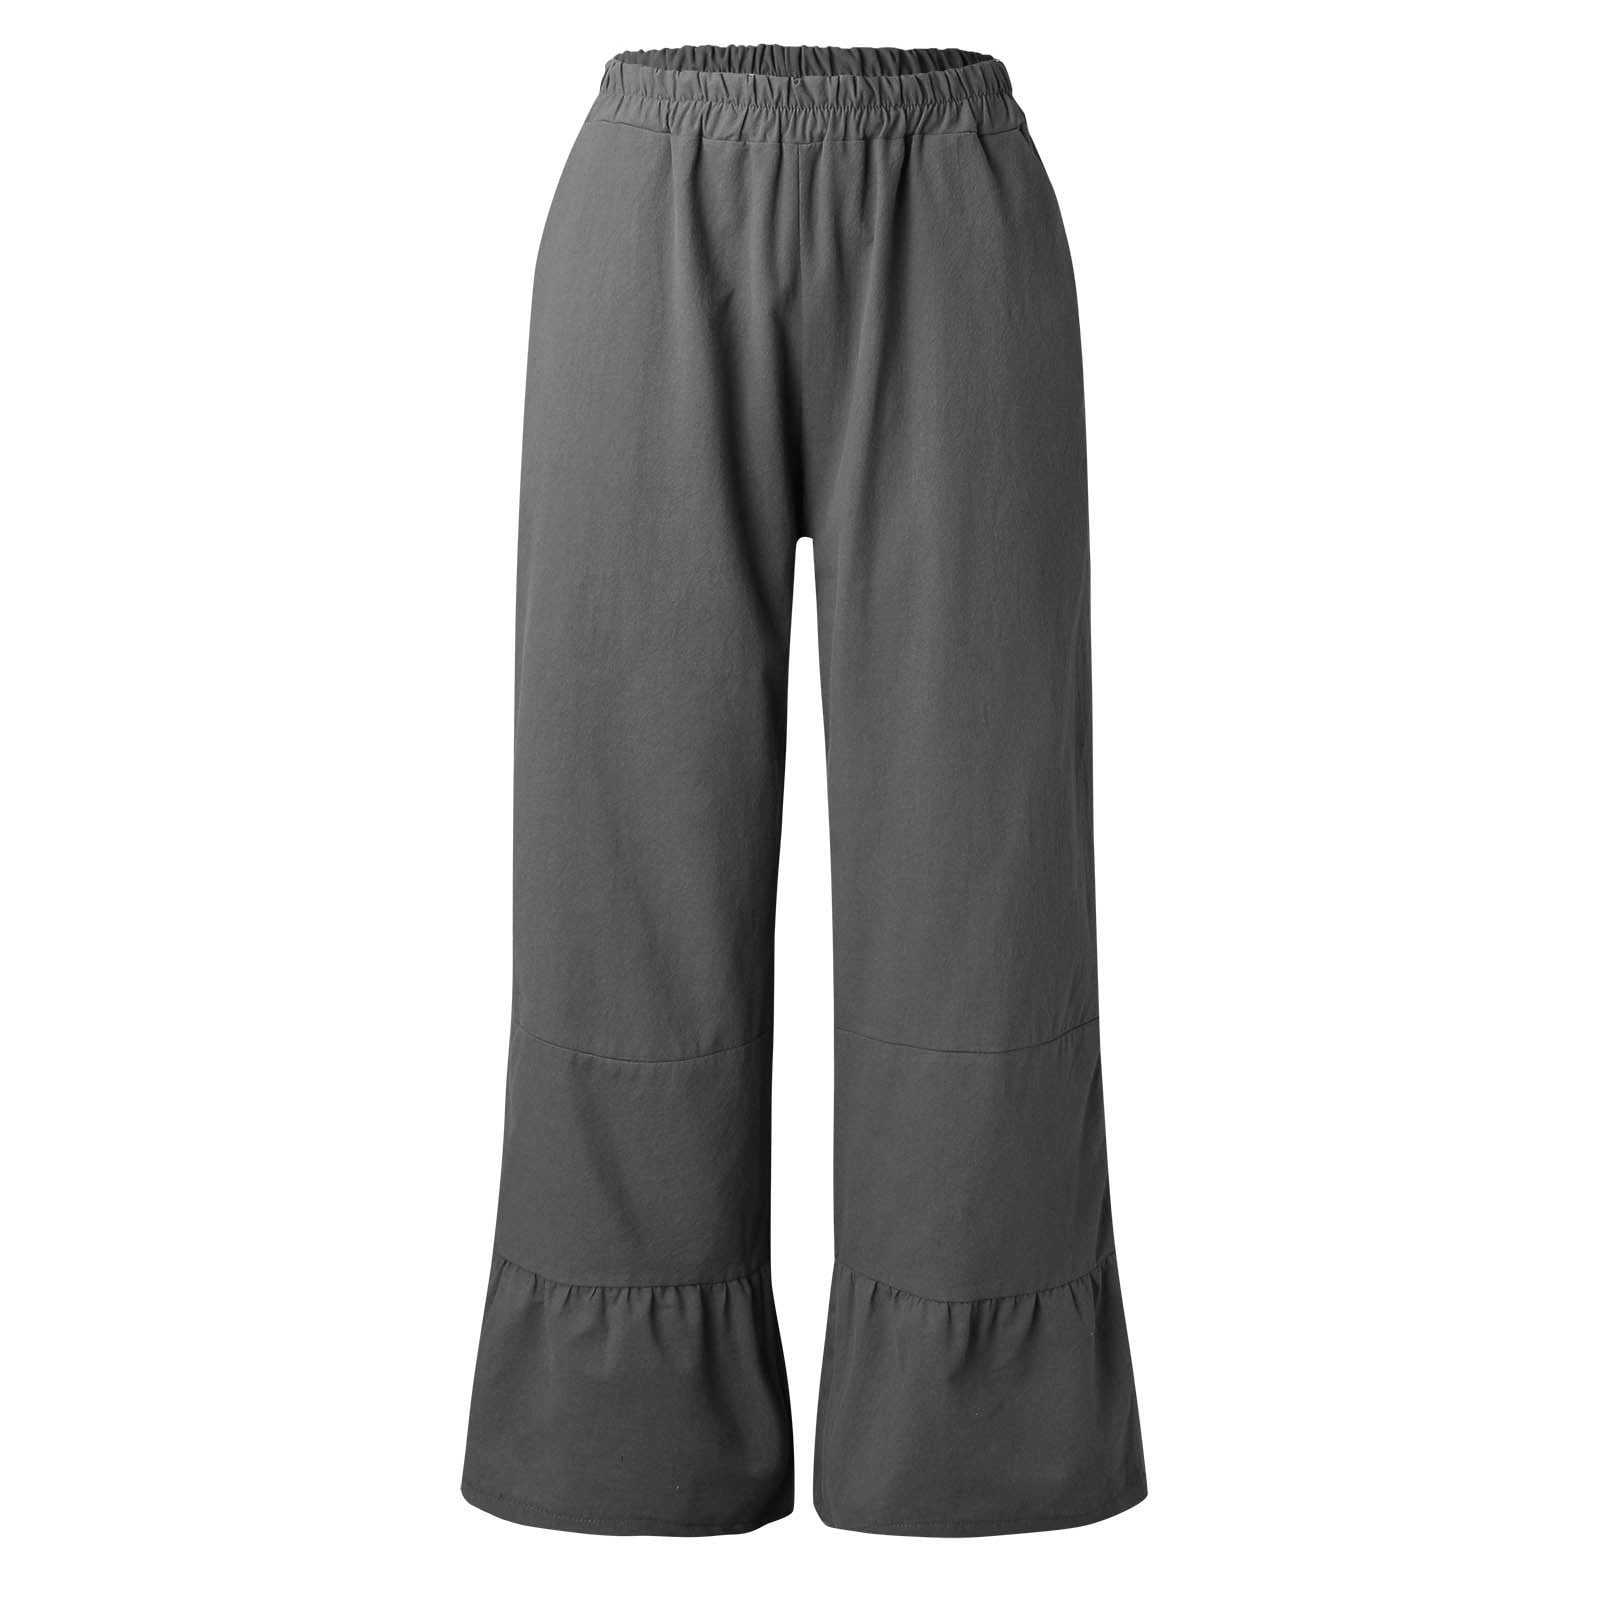 Aayomet Yoga Pants For Women With Pockets Yoga Pants with Pockets for Women  Capri Leggings for Women Yoga Leggings with Pockets for Women High  Waisted,Black XL 